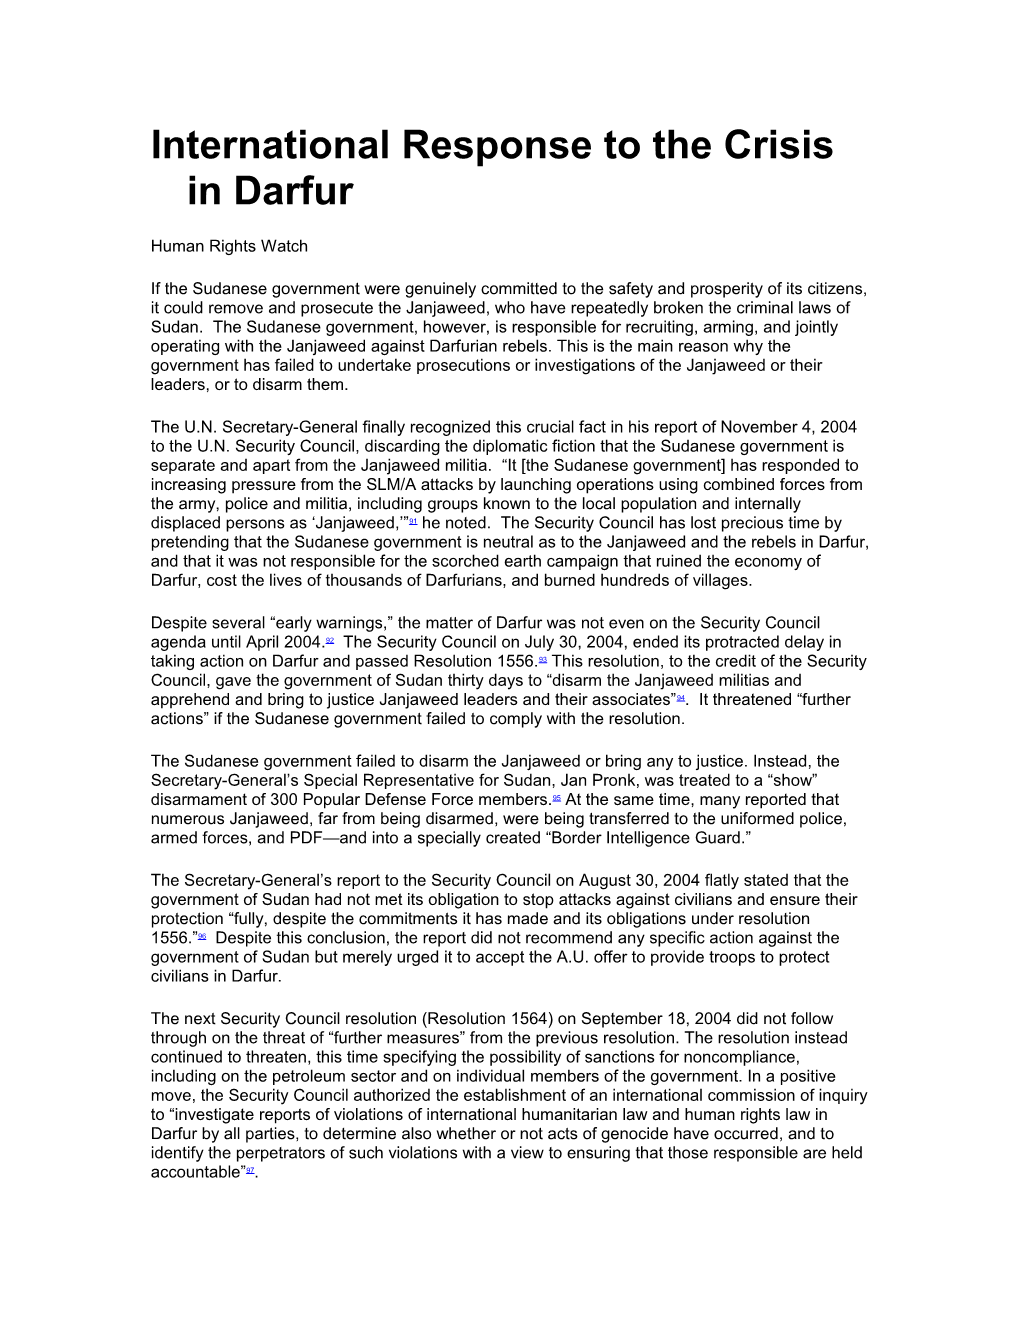 International Response to the Crisis in Darfur